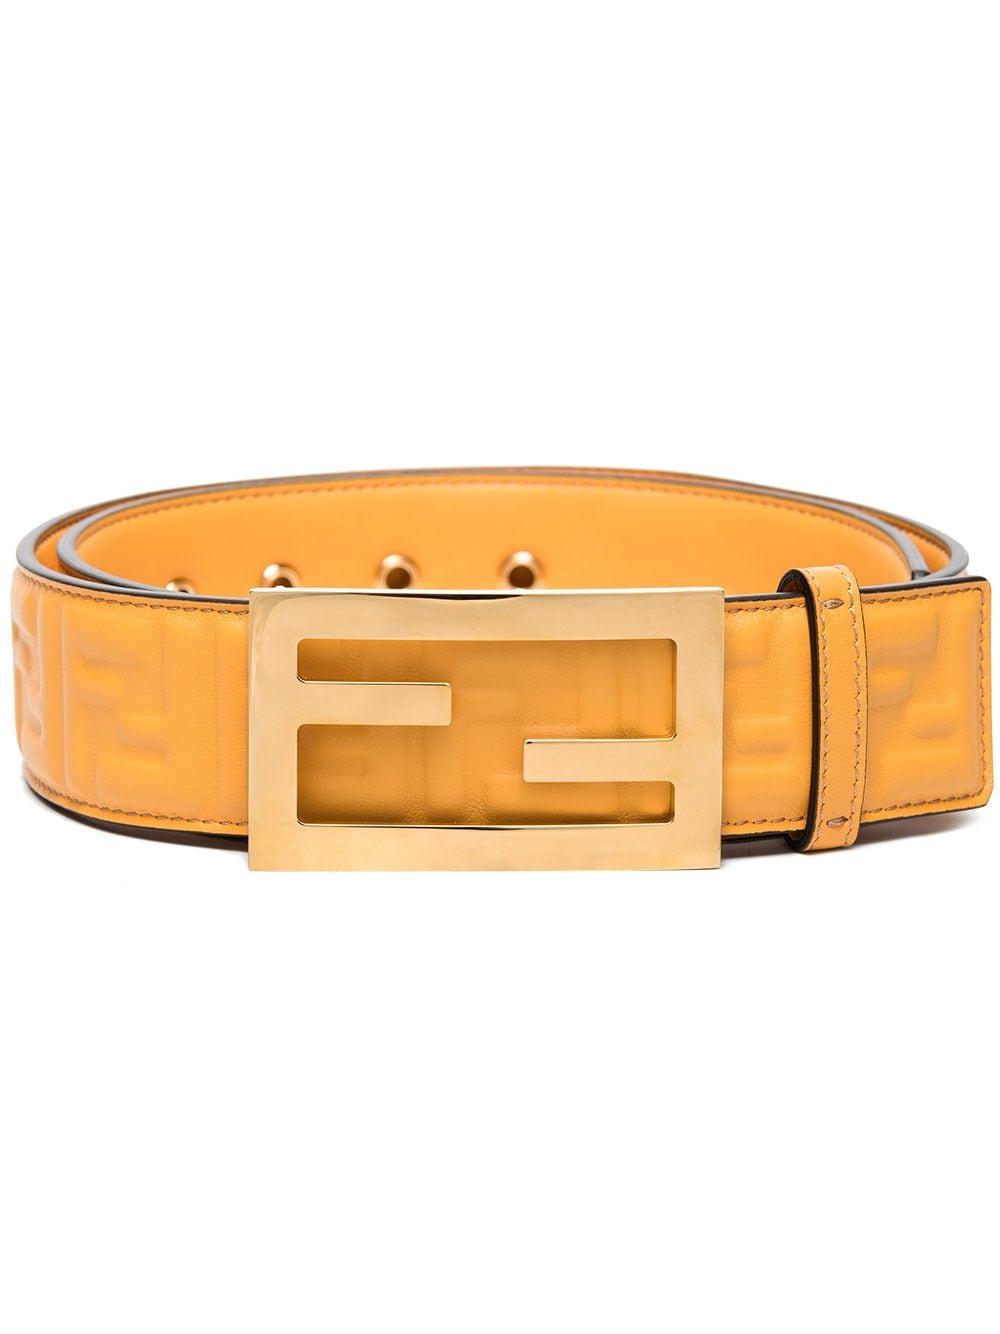 Fendi Leather Baguette Embossed Logo Belt in Yellow - Lyst